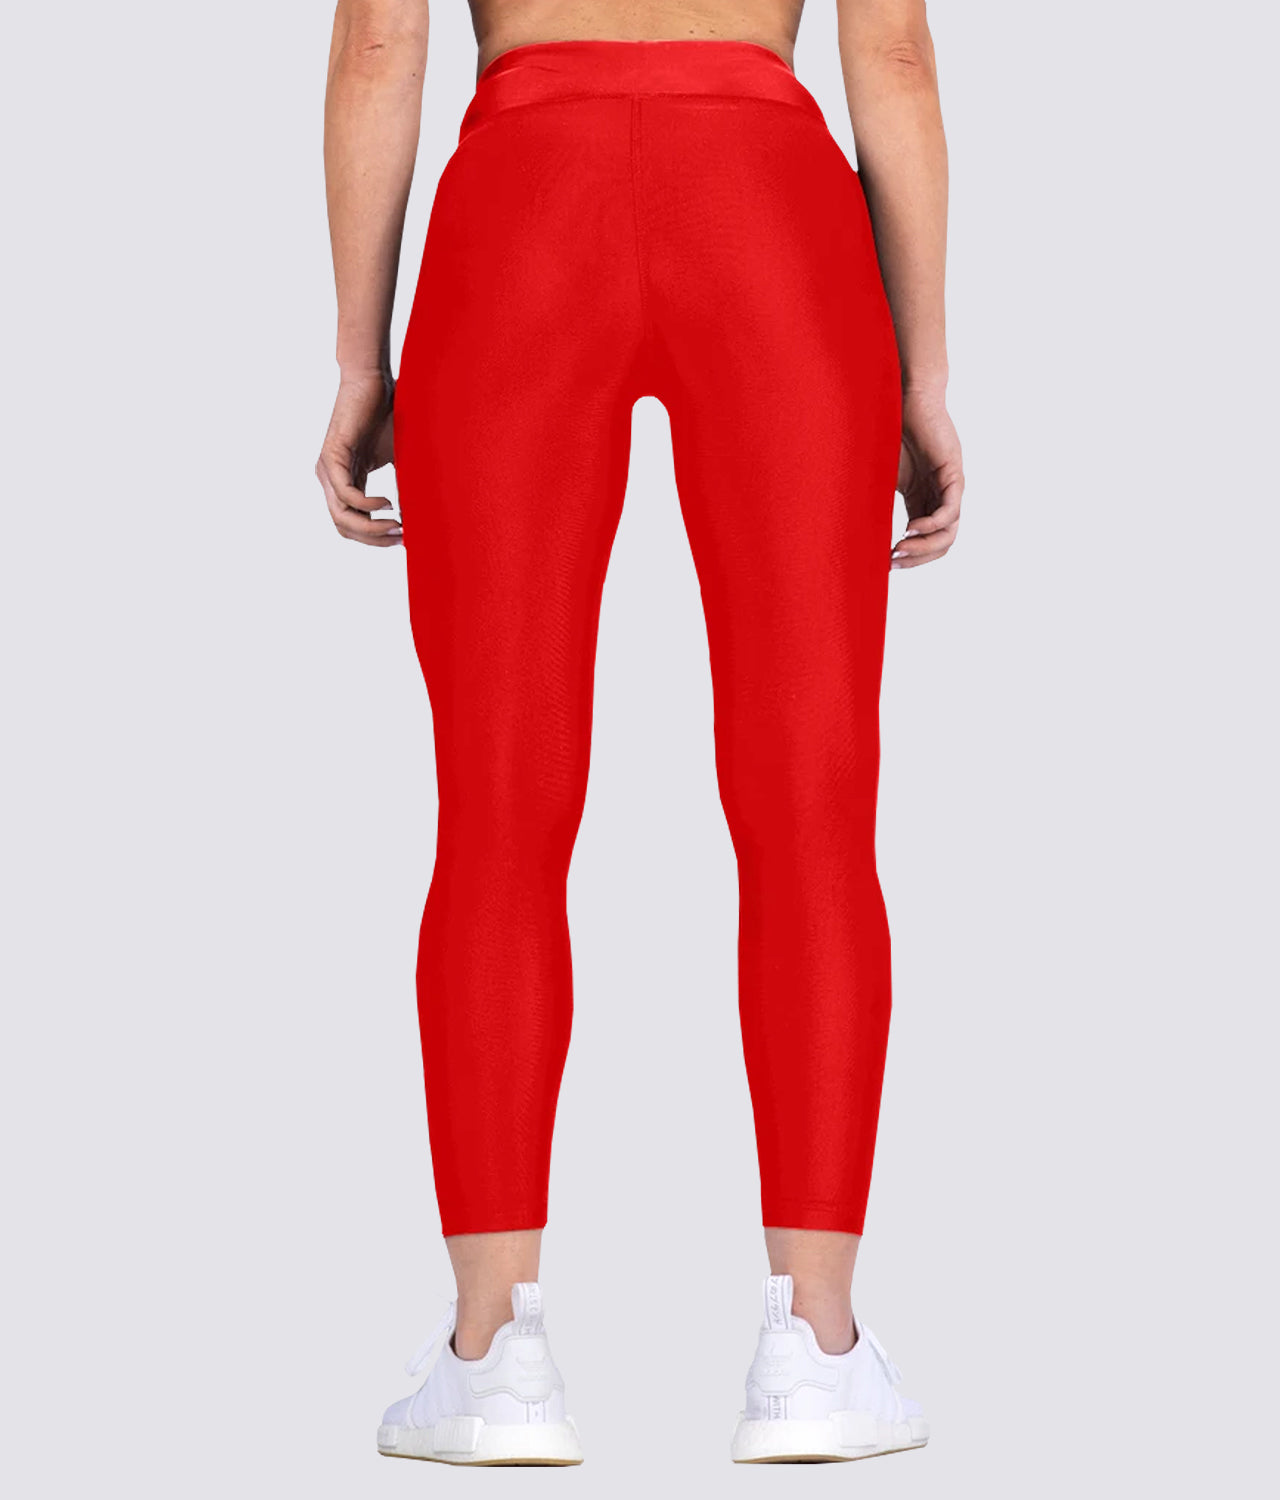 Elite Sports Comfortable & Secure Red Women Compression Muay Thai Spat Pants